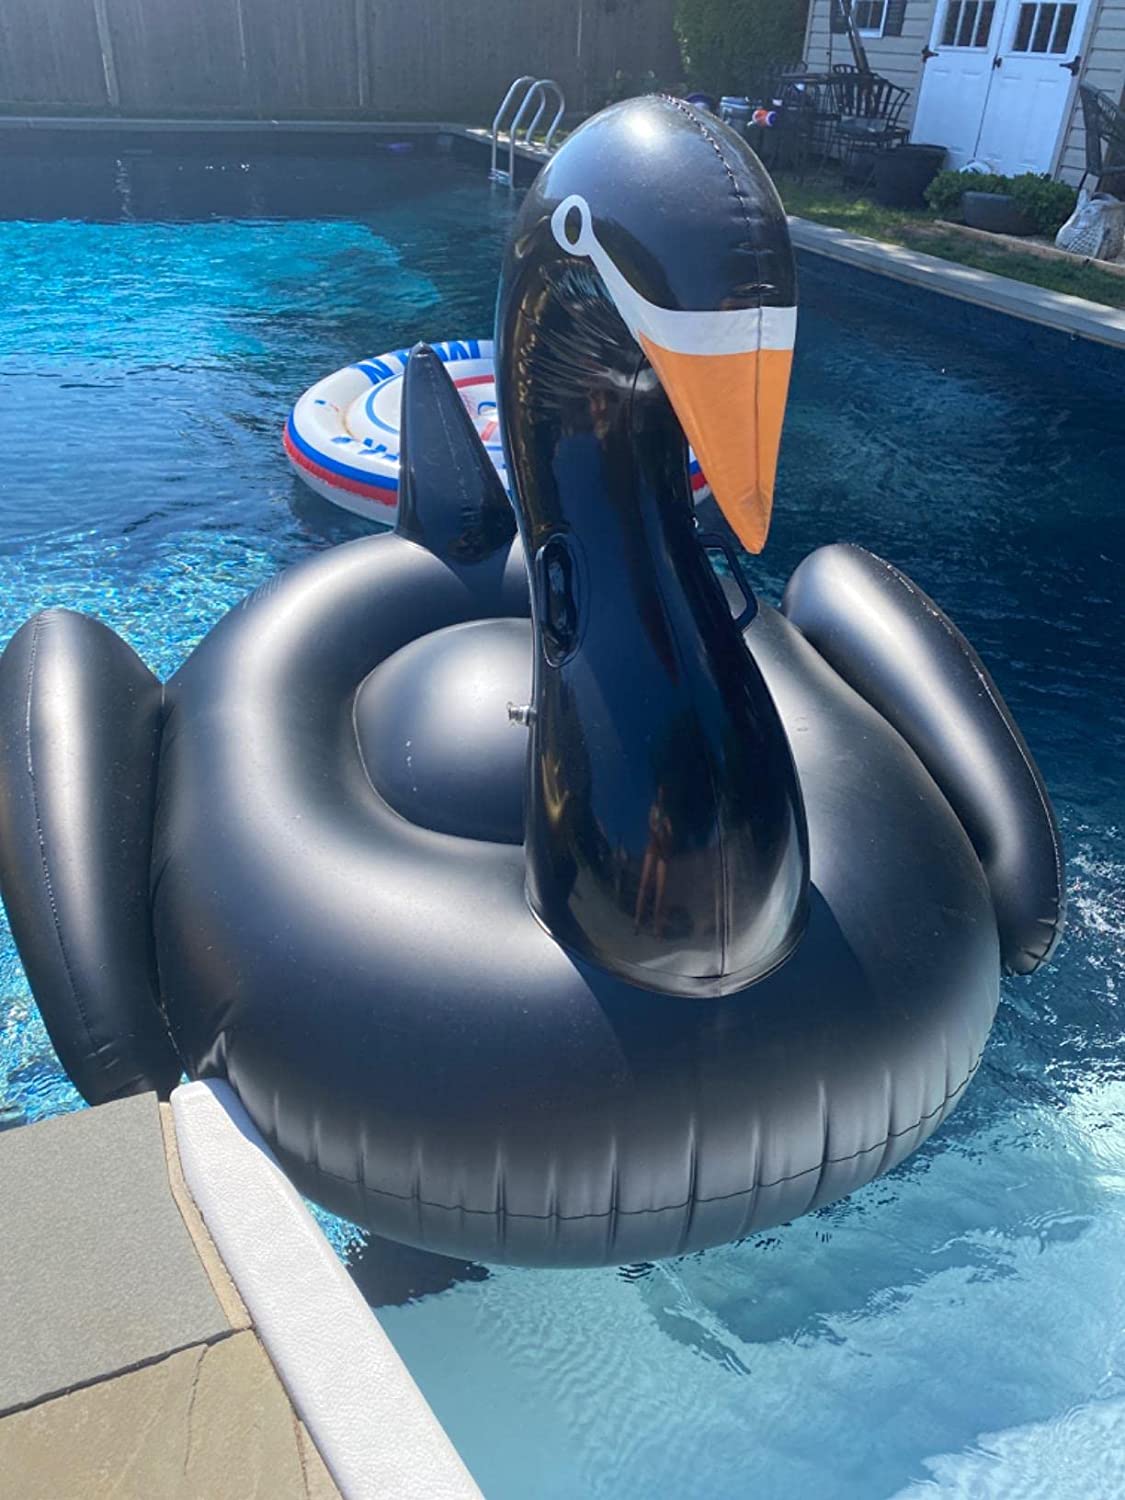 A black swan pool float in a backyard swimming pool.